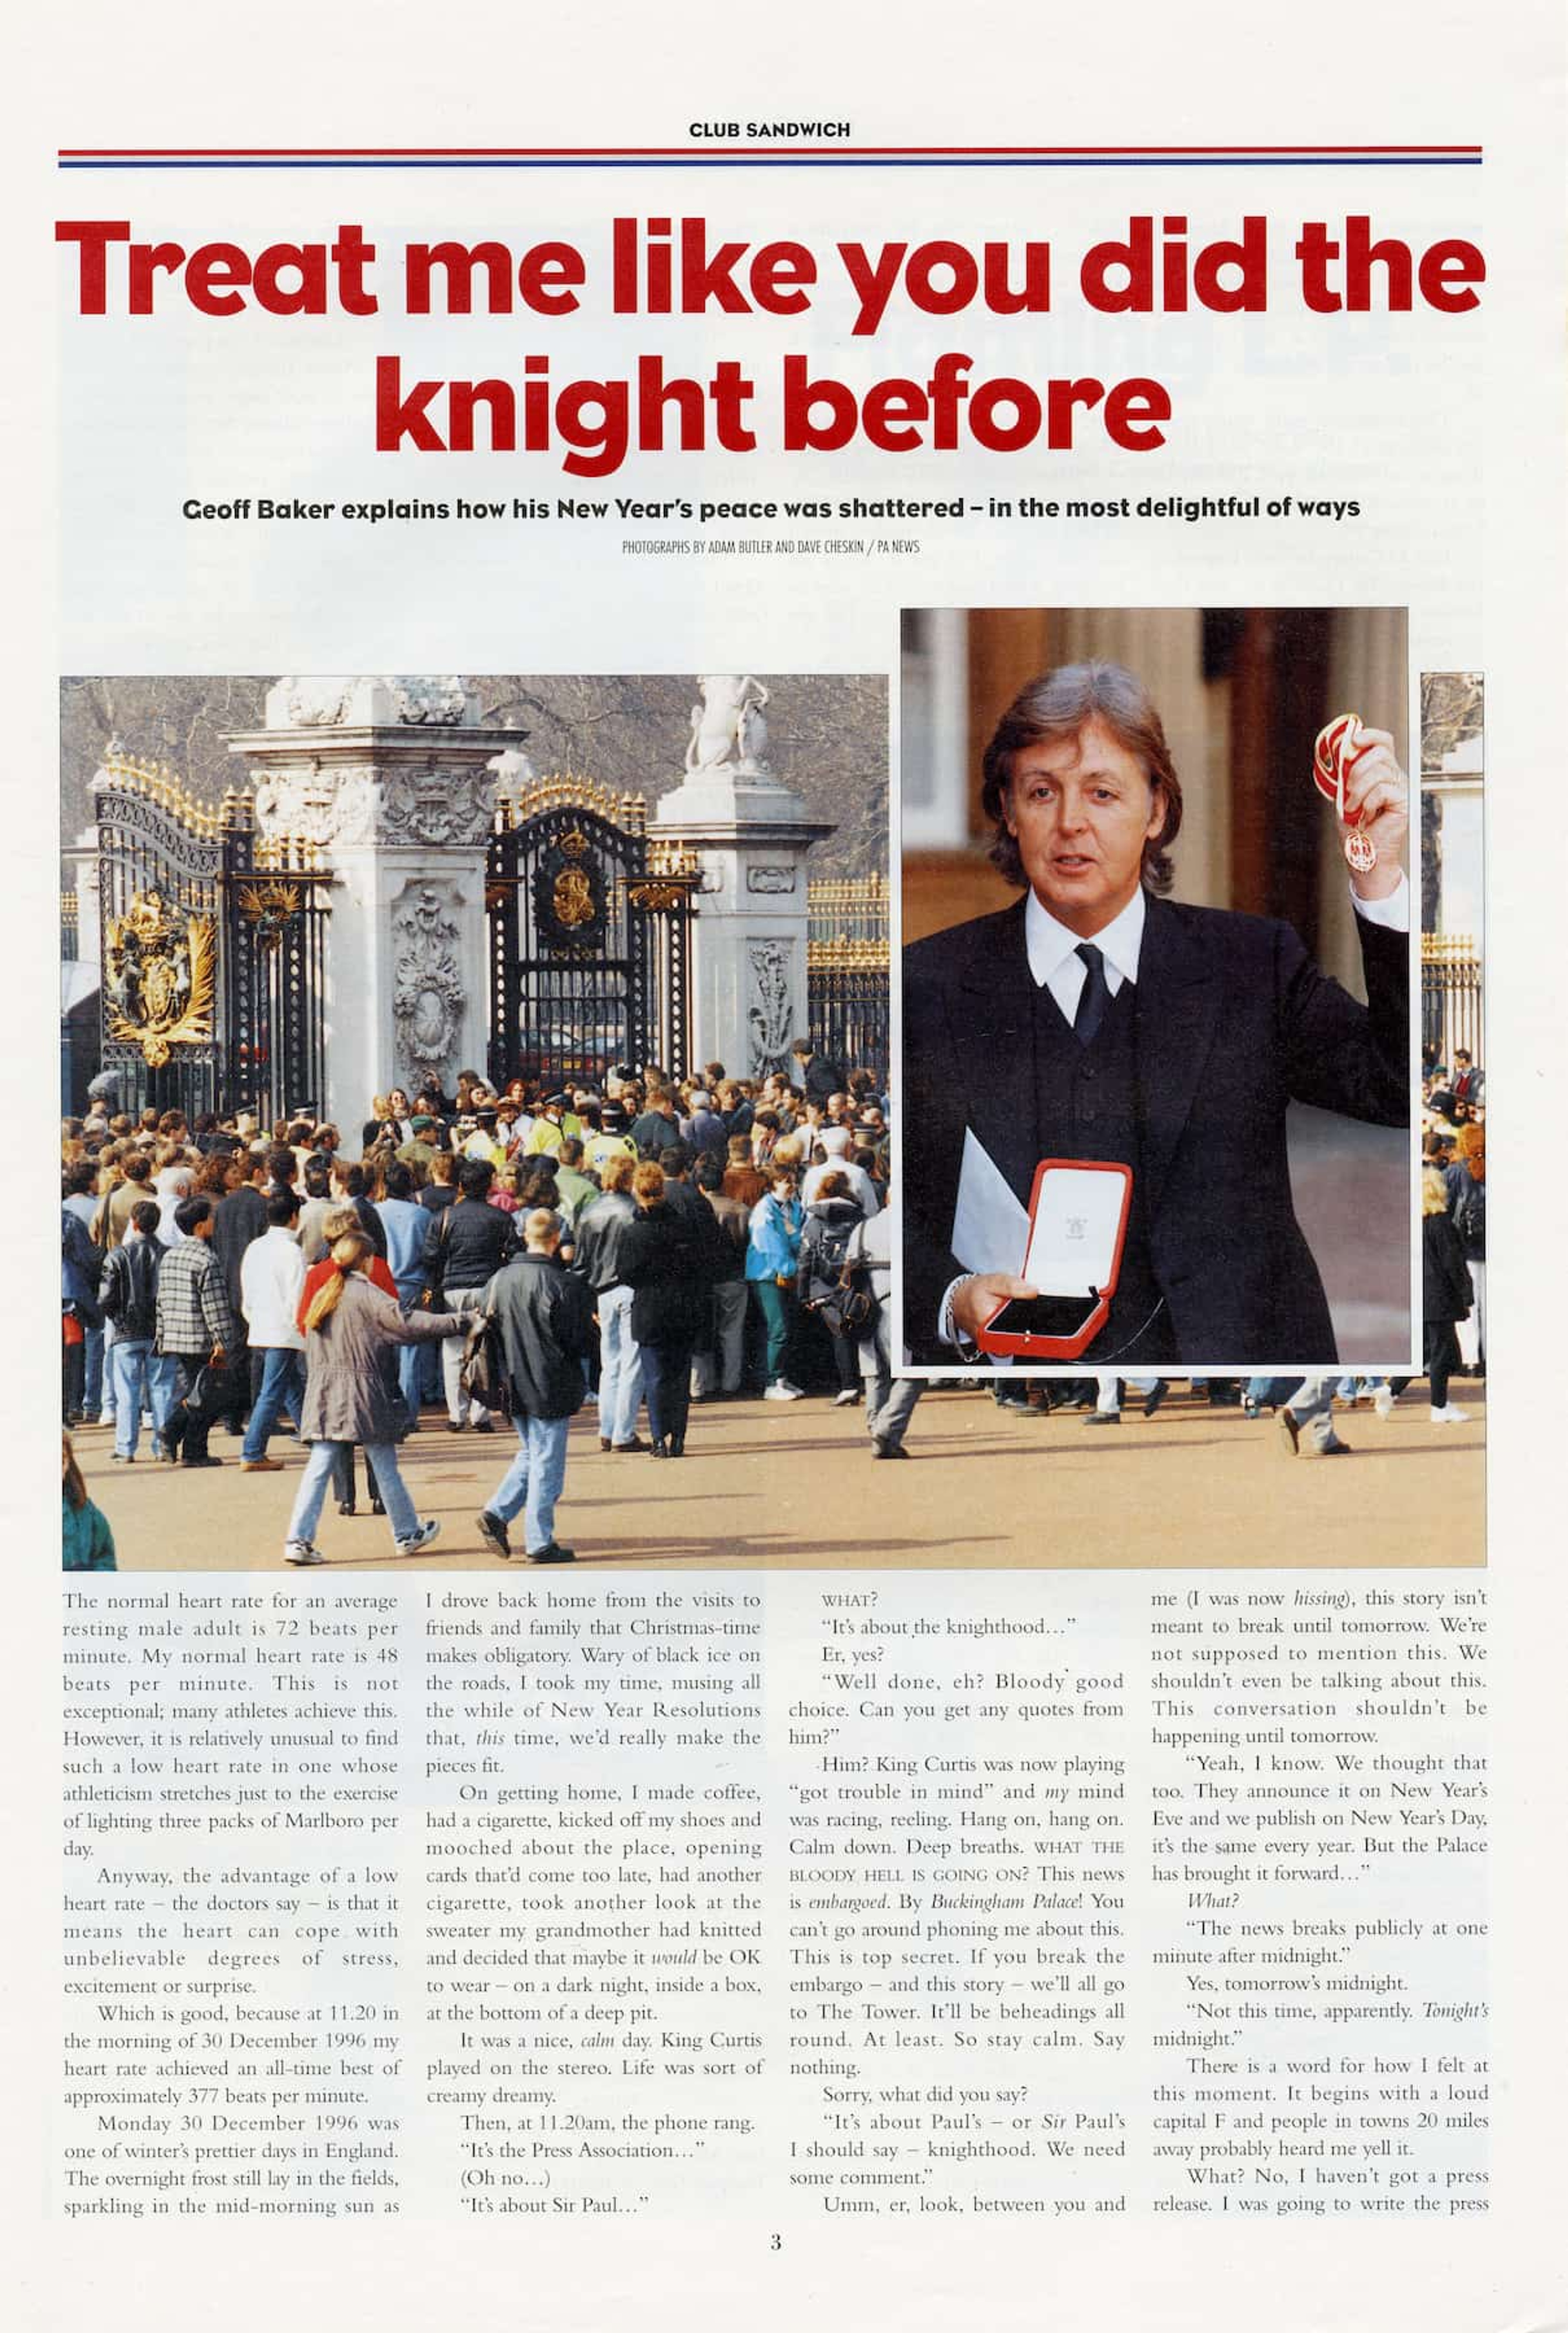 Scan of 'Club Sandwich' magazine spread on Paul's knighthood in 1997.